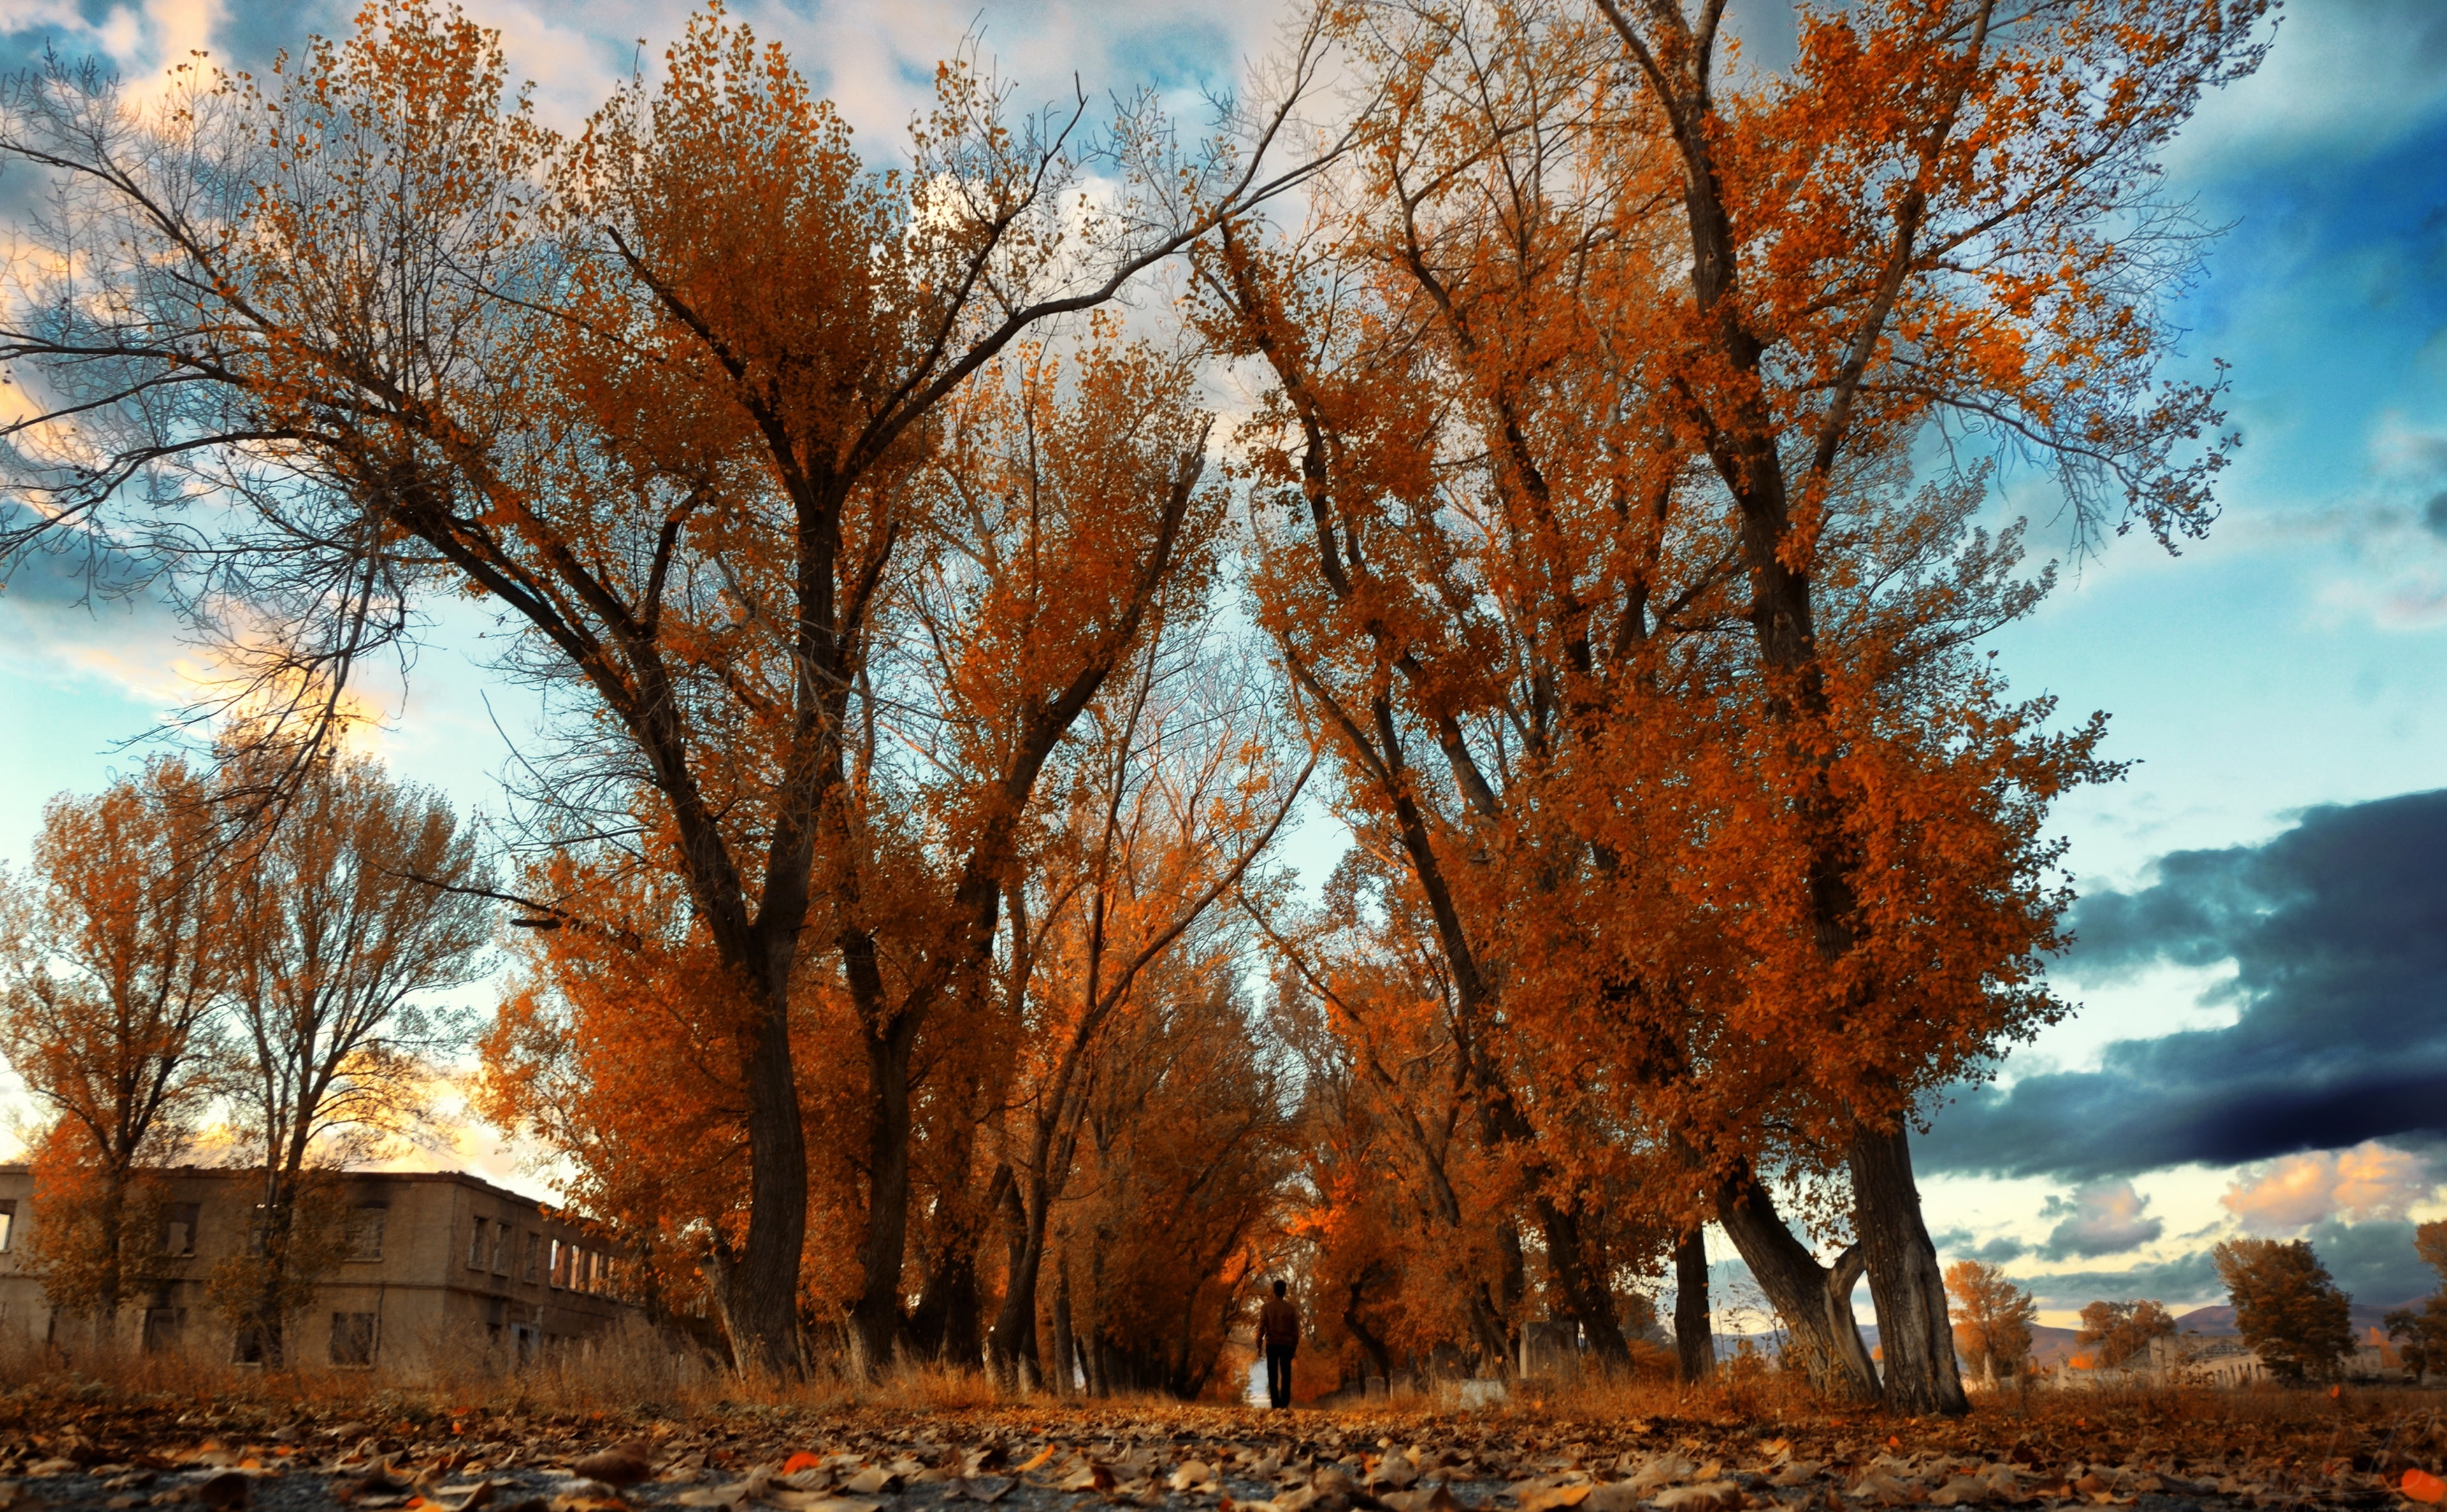 Armenia, Gyumri, red leafed trees, Seasons, Autumn, Nature, Beautiful